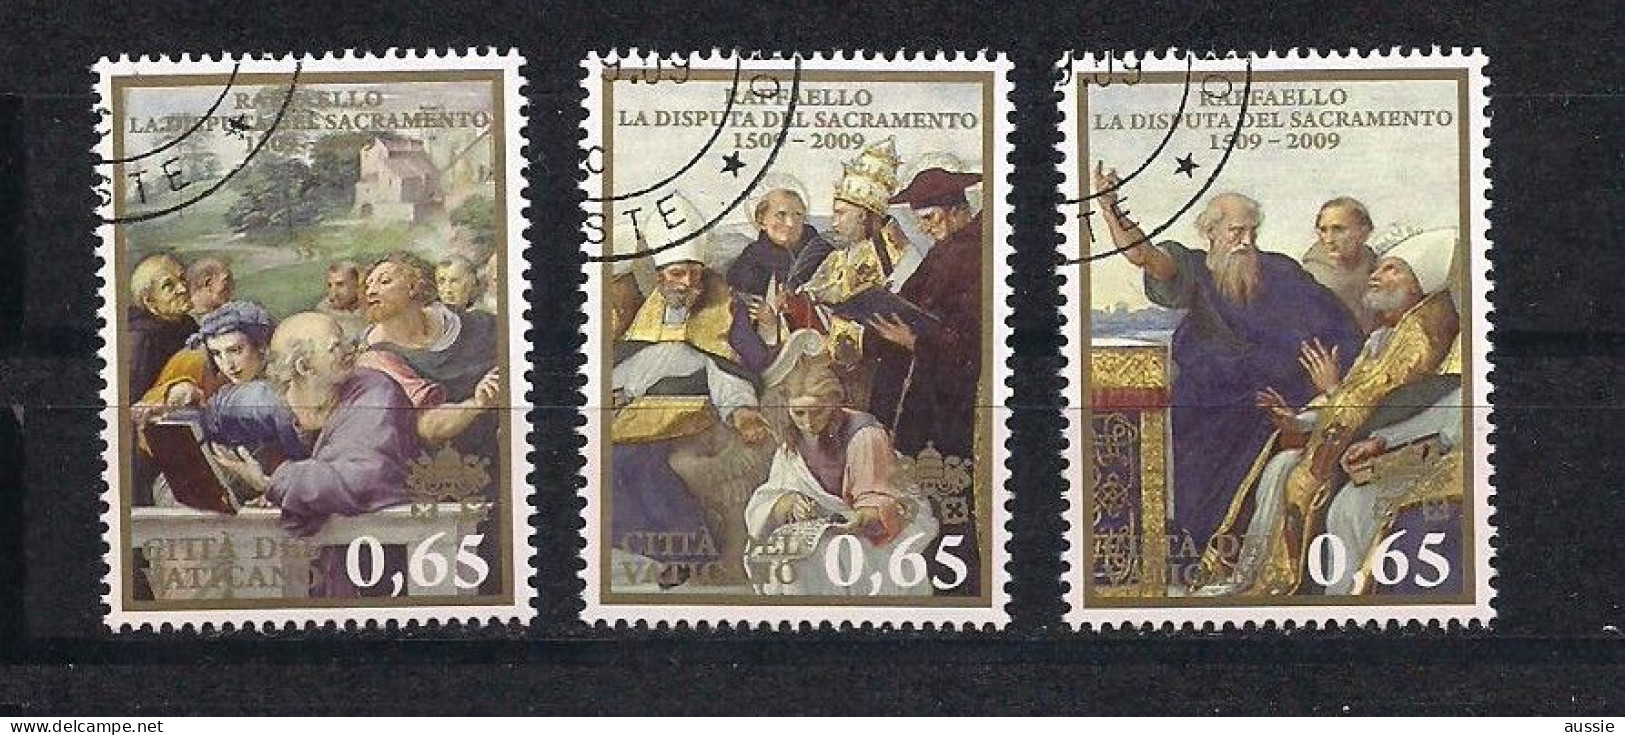 Vatican Vatikaanstad 2009 Yvertn° 1501-1503 (°) Oblitéré Used Cote 6,00 Euro - Used Stamps